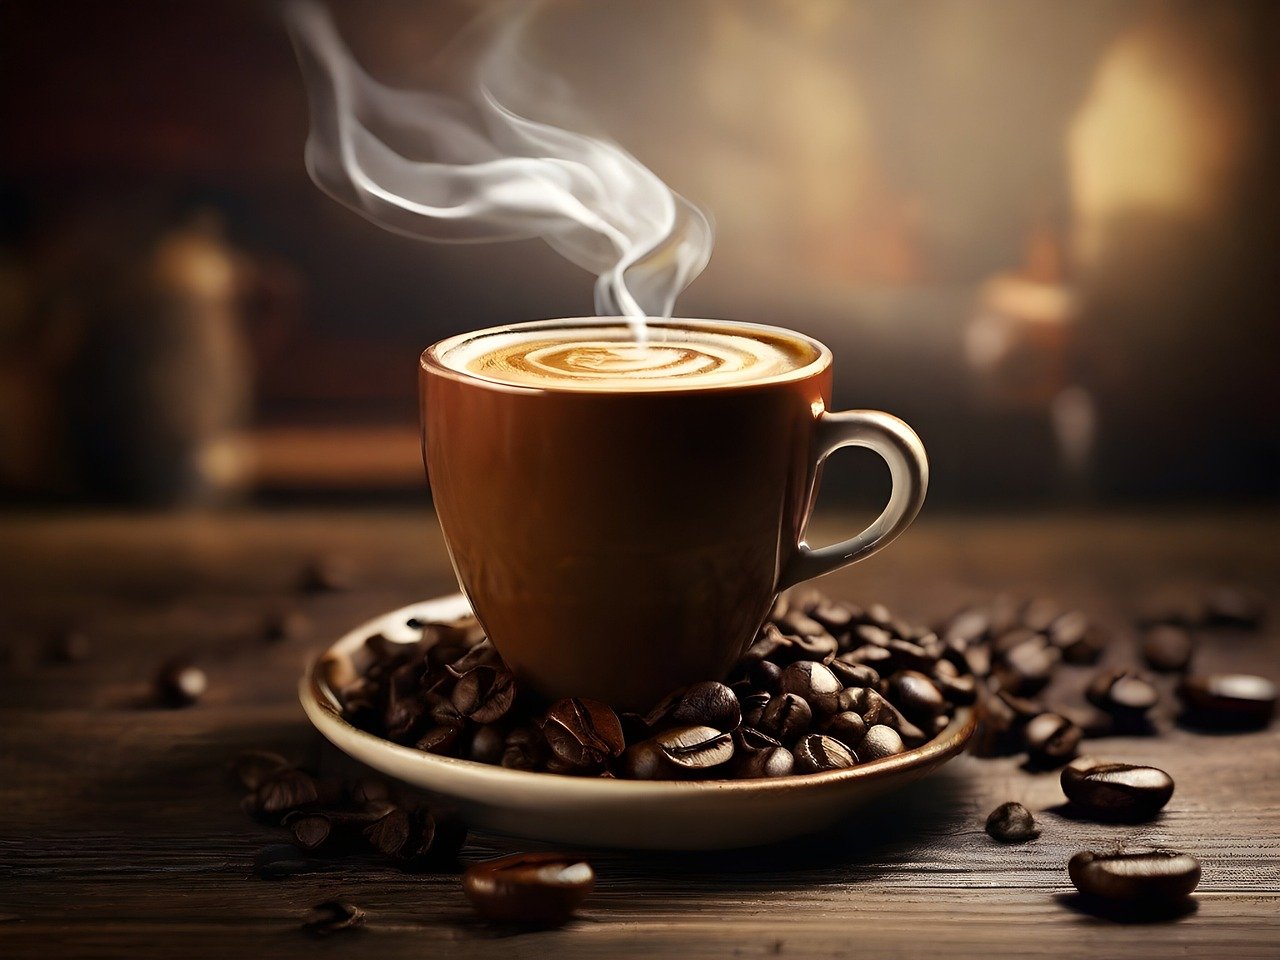 How To Clean Mr Coffee Espresso Machine?